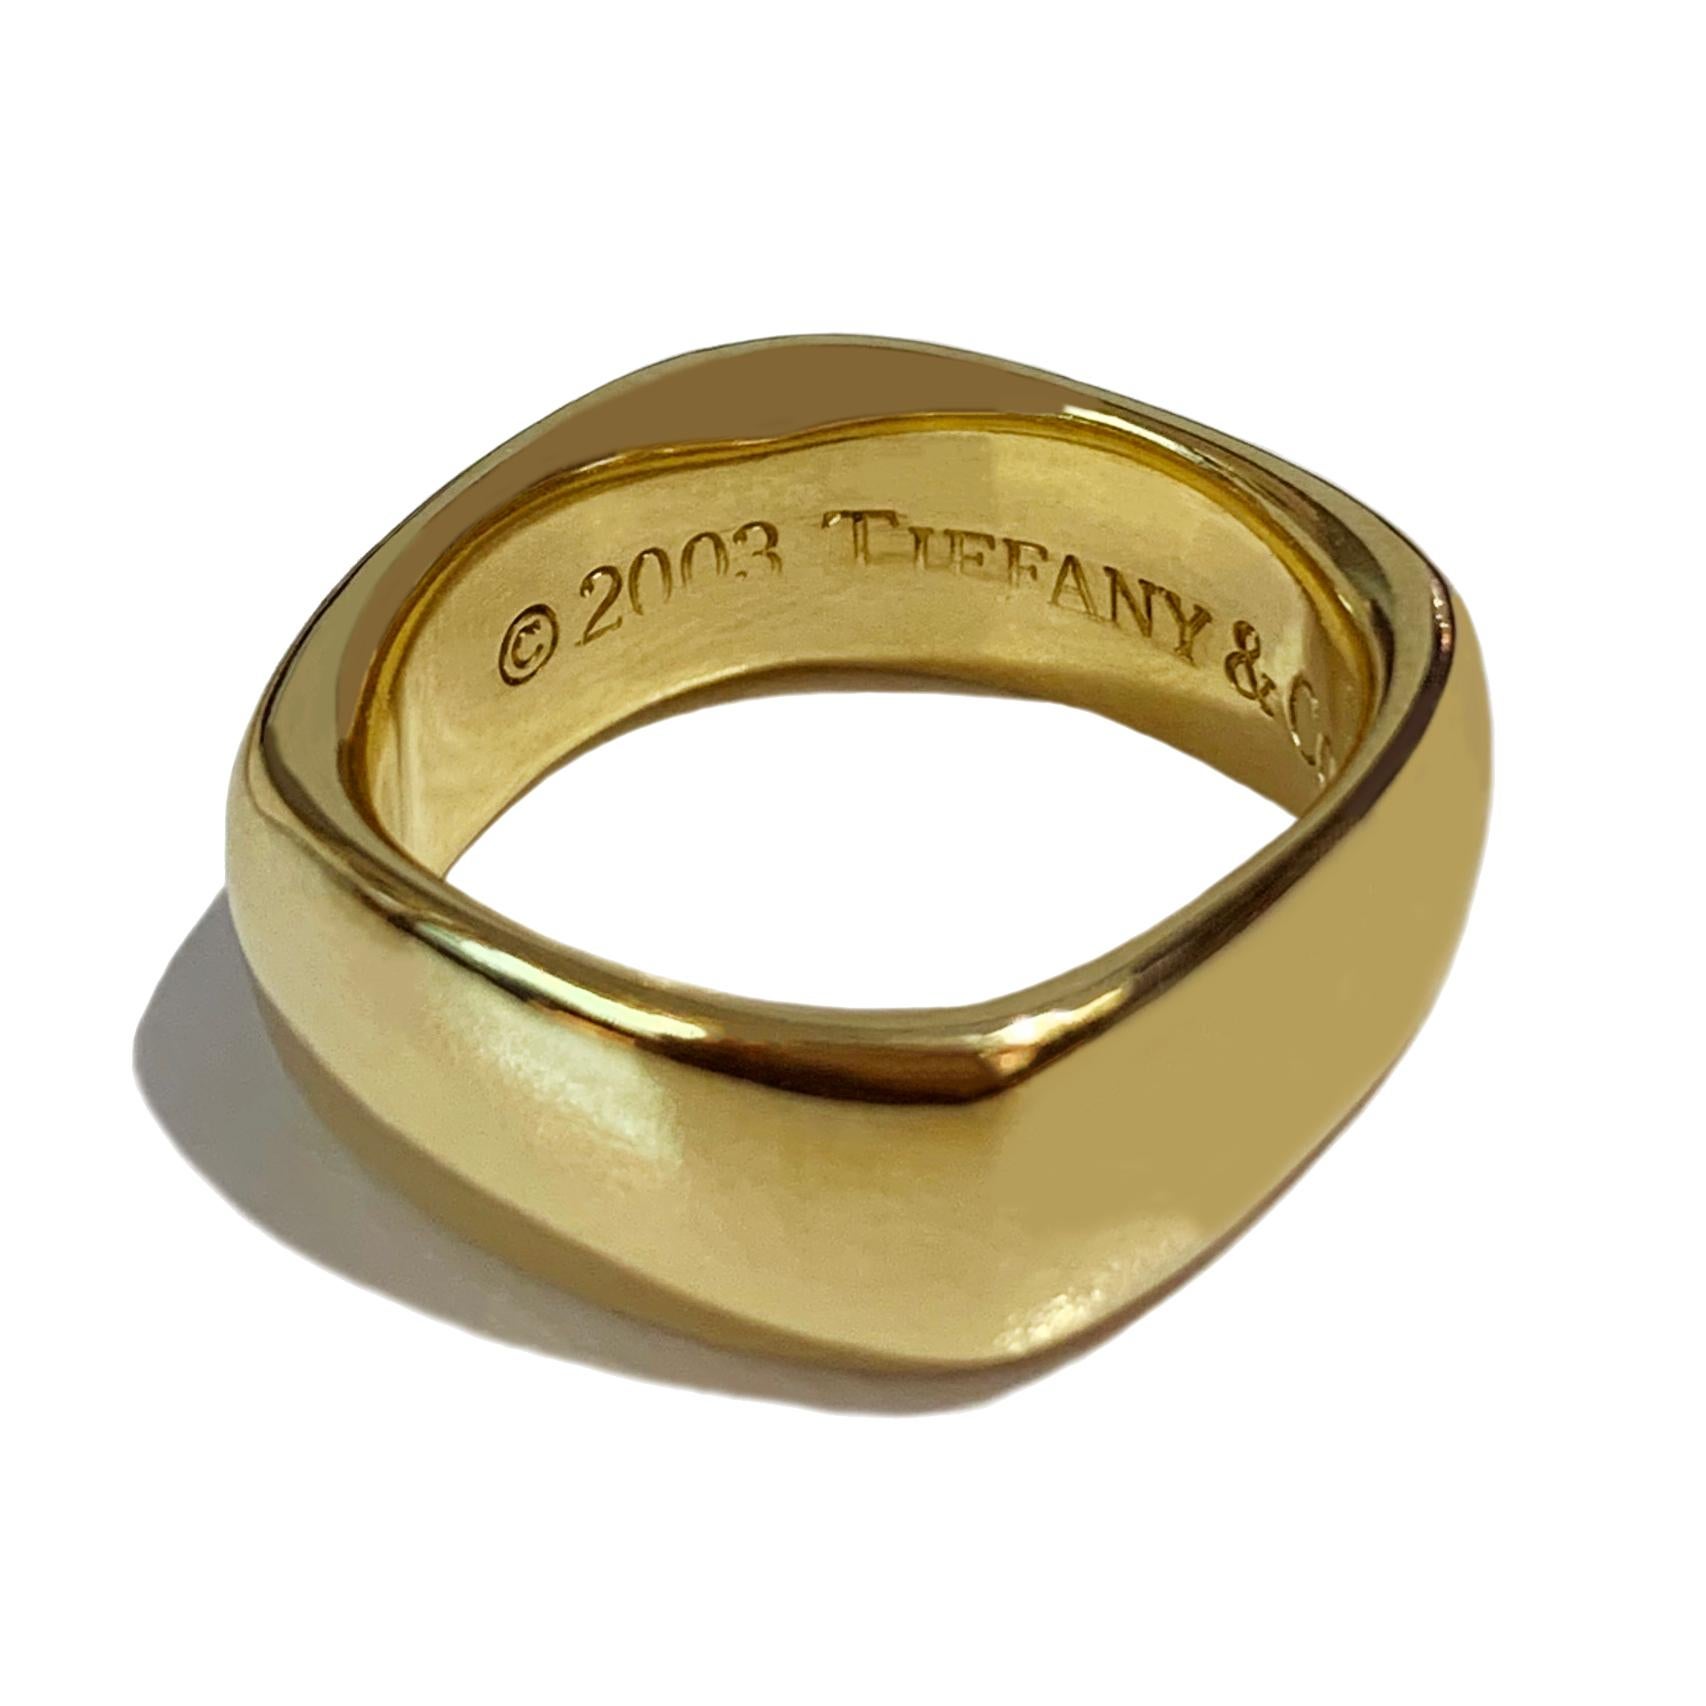 tiffany square ring